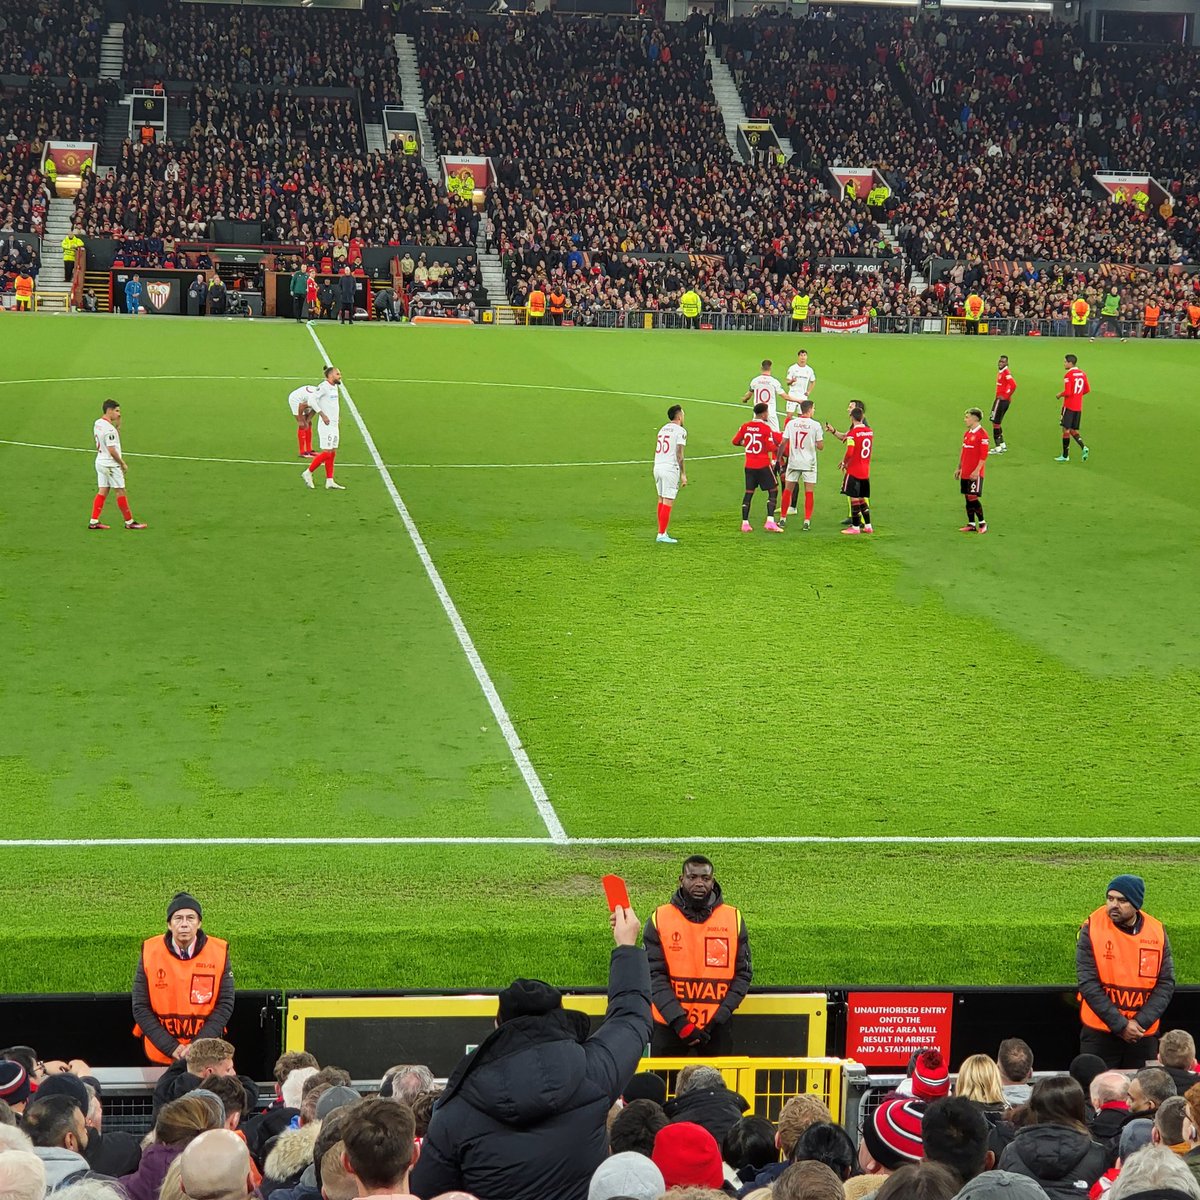 Unreal seat thanks to @Haaaamz

#ManchesterUnited #SevillaFC #OldTrafford